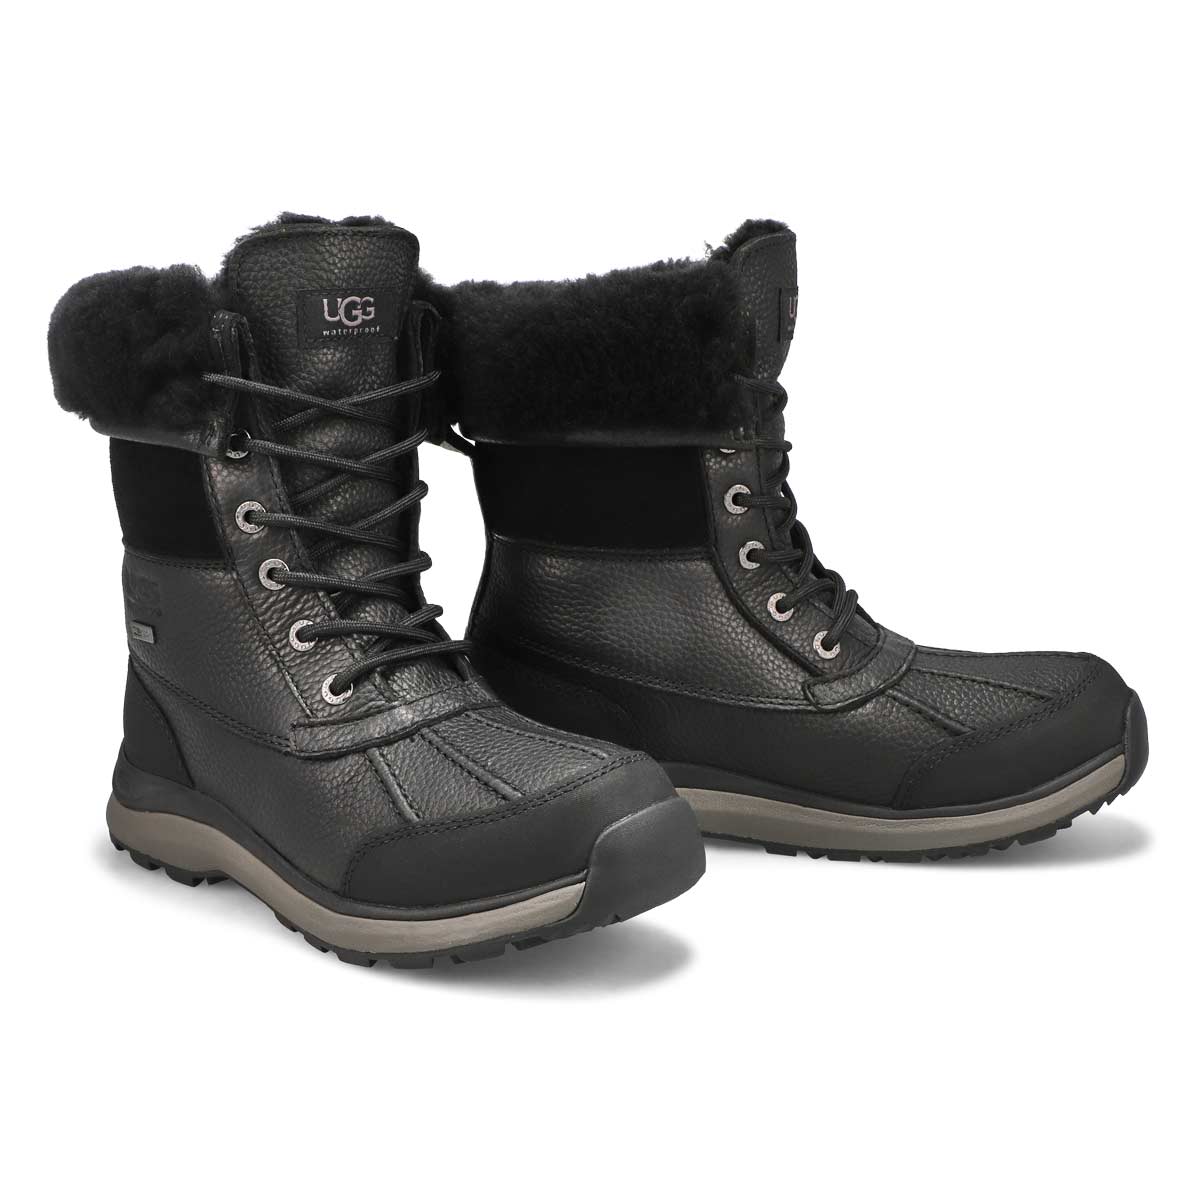 Women's Adirondack III Winter Boot - Black/Black